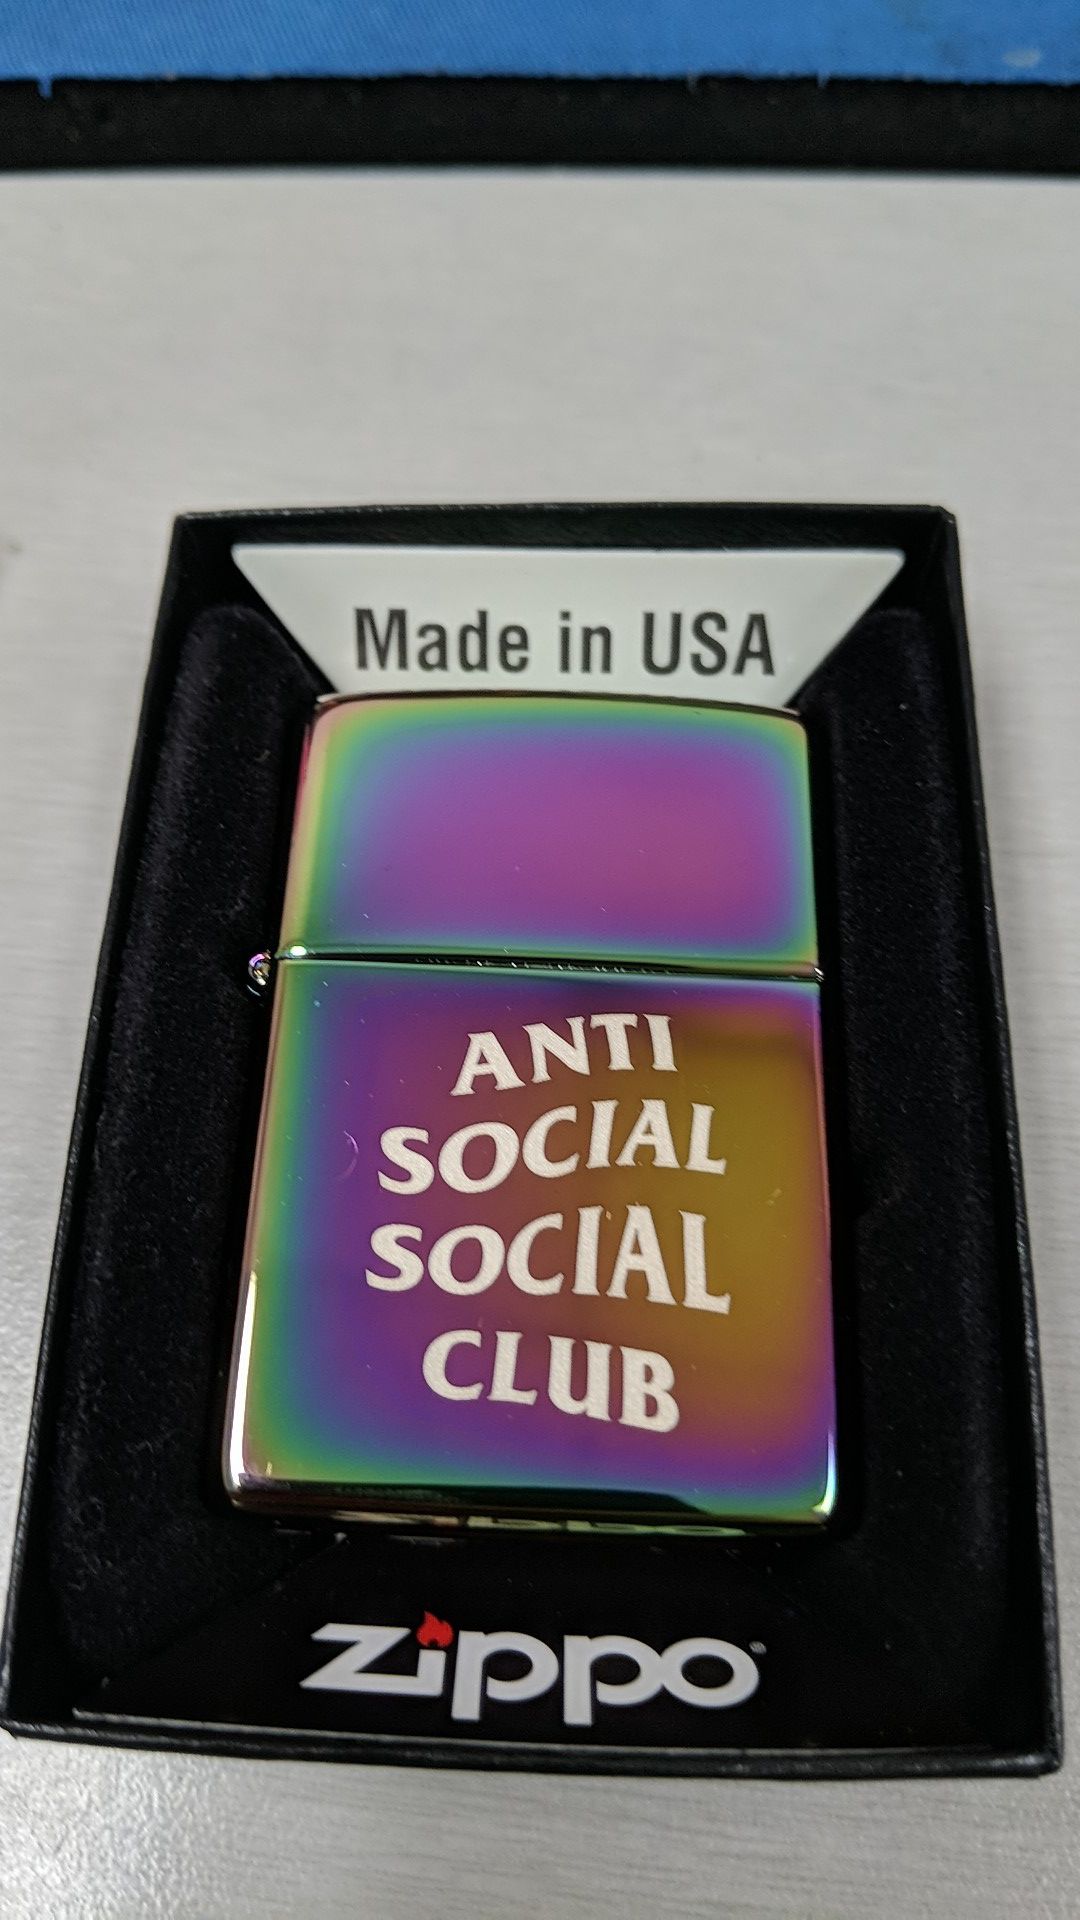 Anti Social Social Club Zippo lighter $100